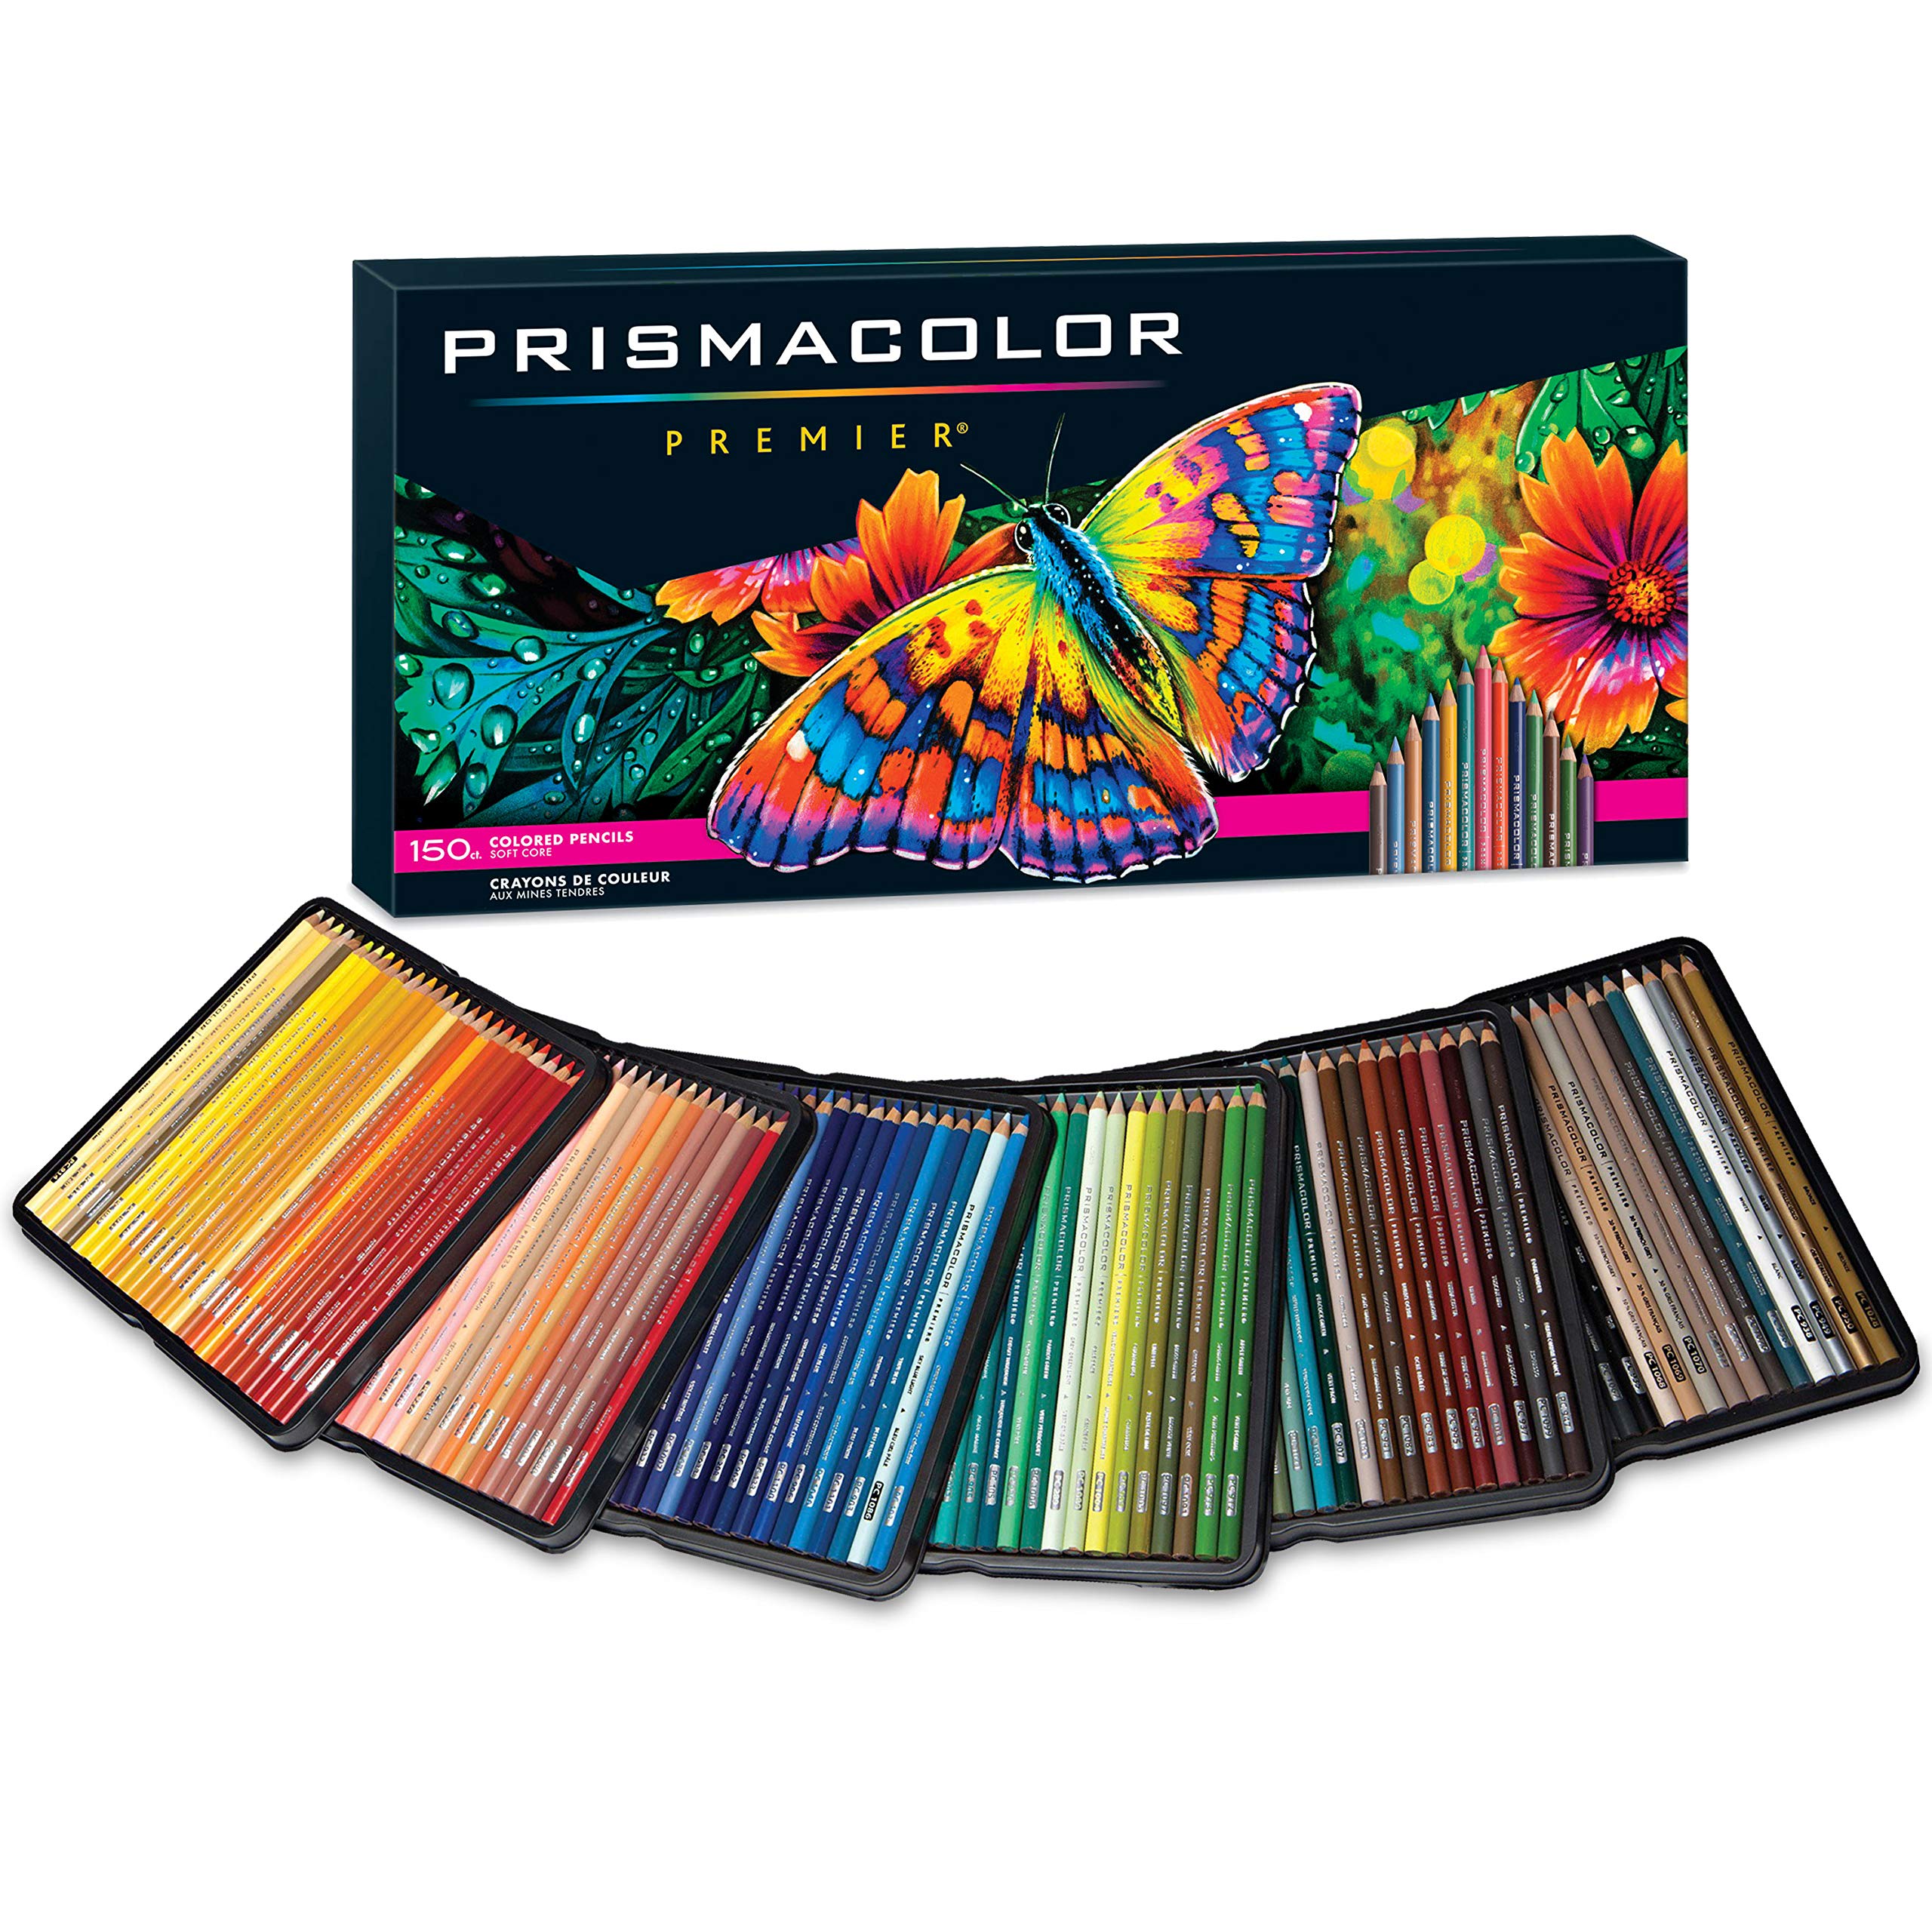 Mua Prismacolor Premier Colored Pencils | Art Supplies for Drawing,  Sketching, Adult Coloring | Soft Core Color Pencils, 150 Pack trên Amazon  Mỹ chính hãng 2023 | Giaonhan247